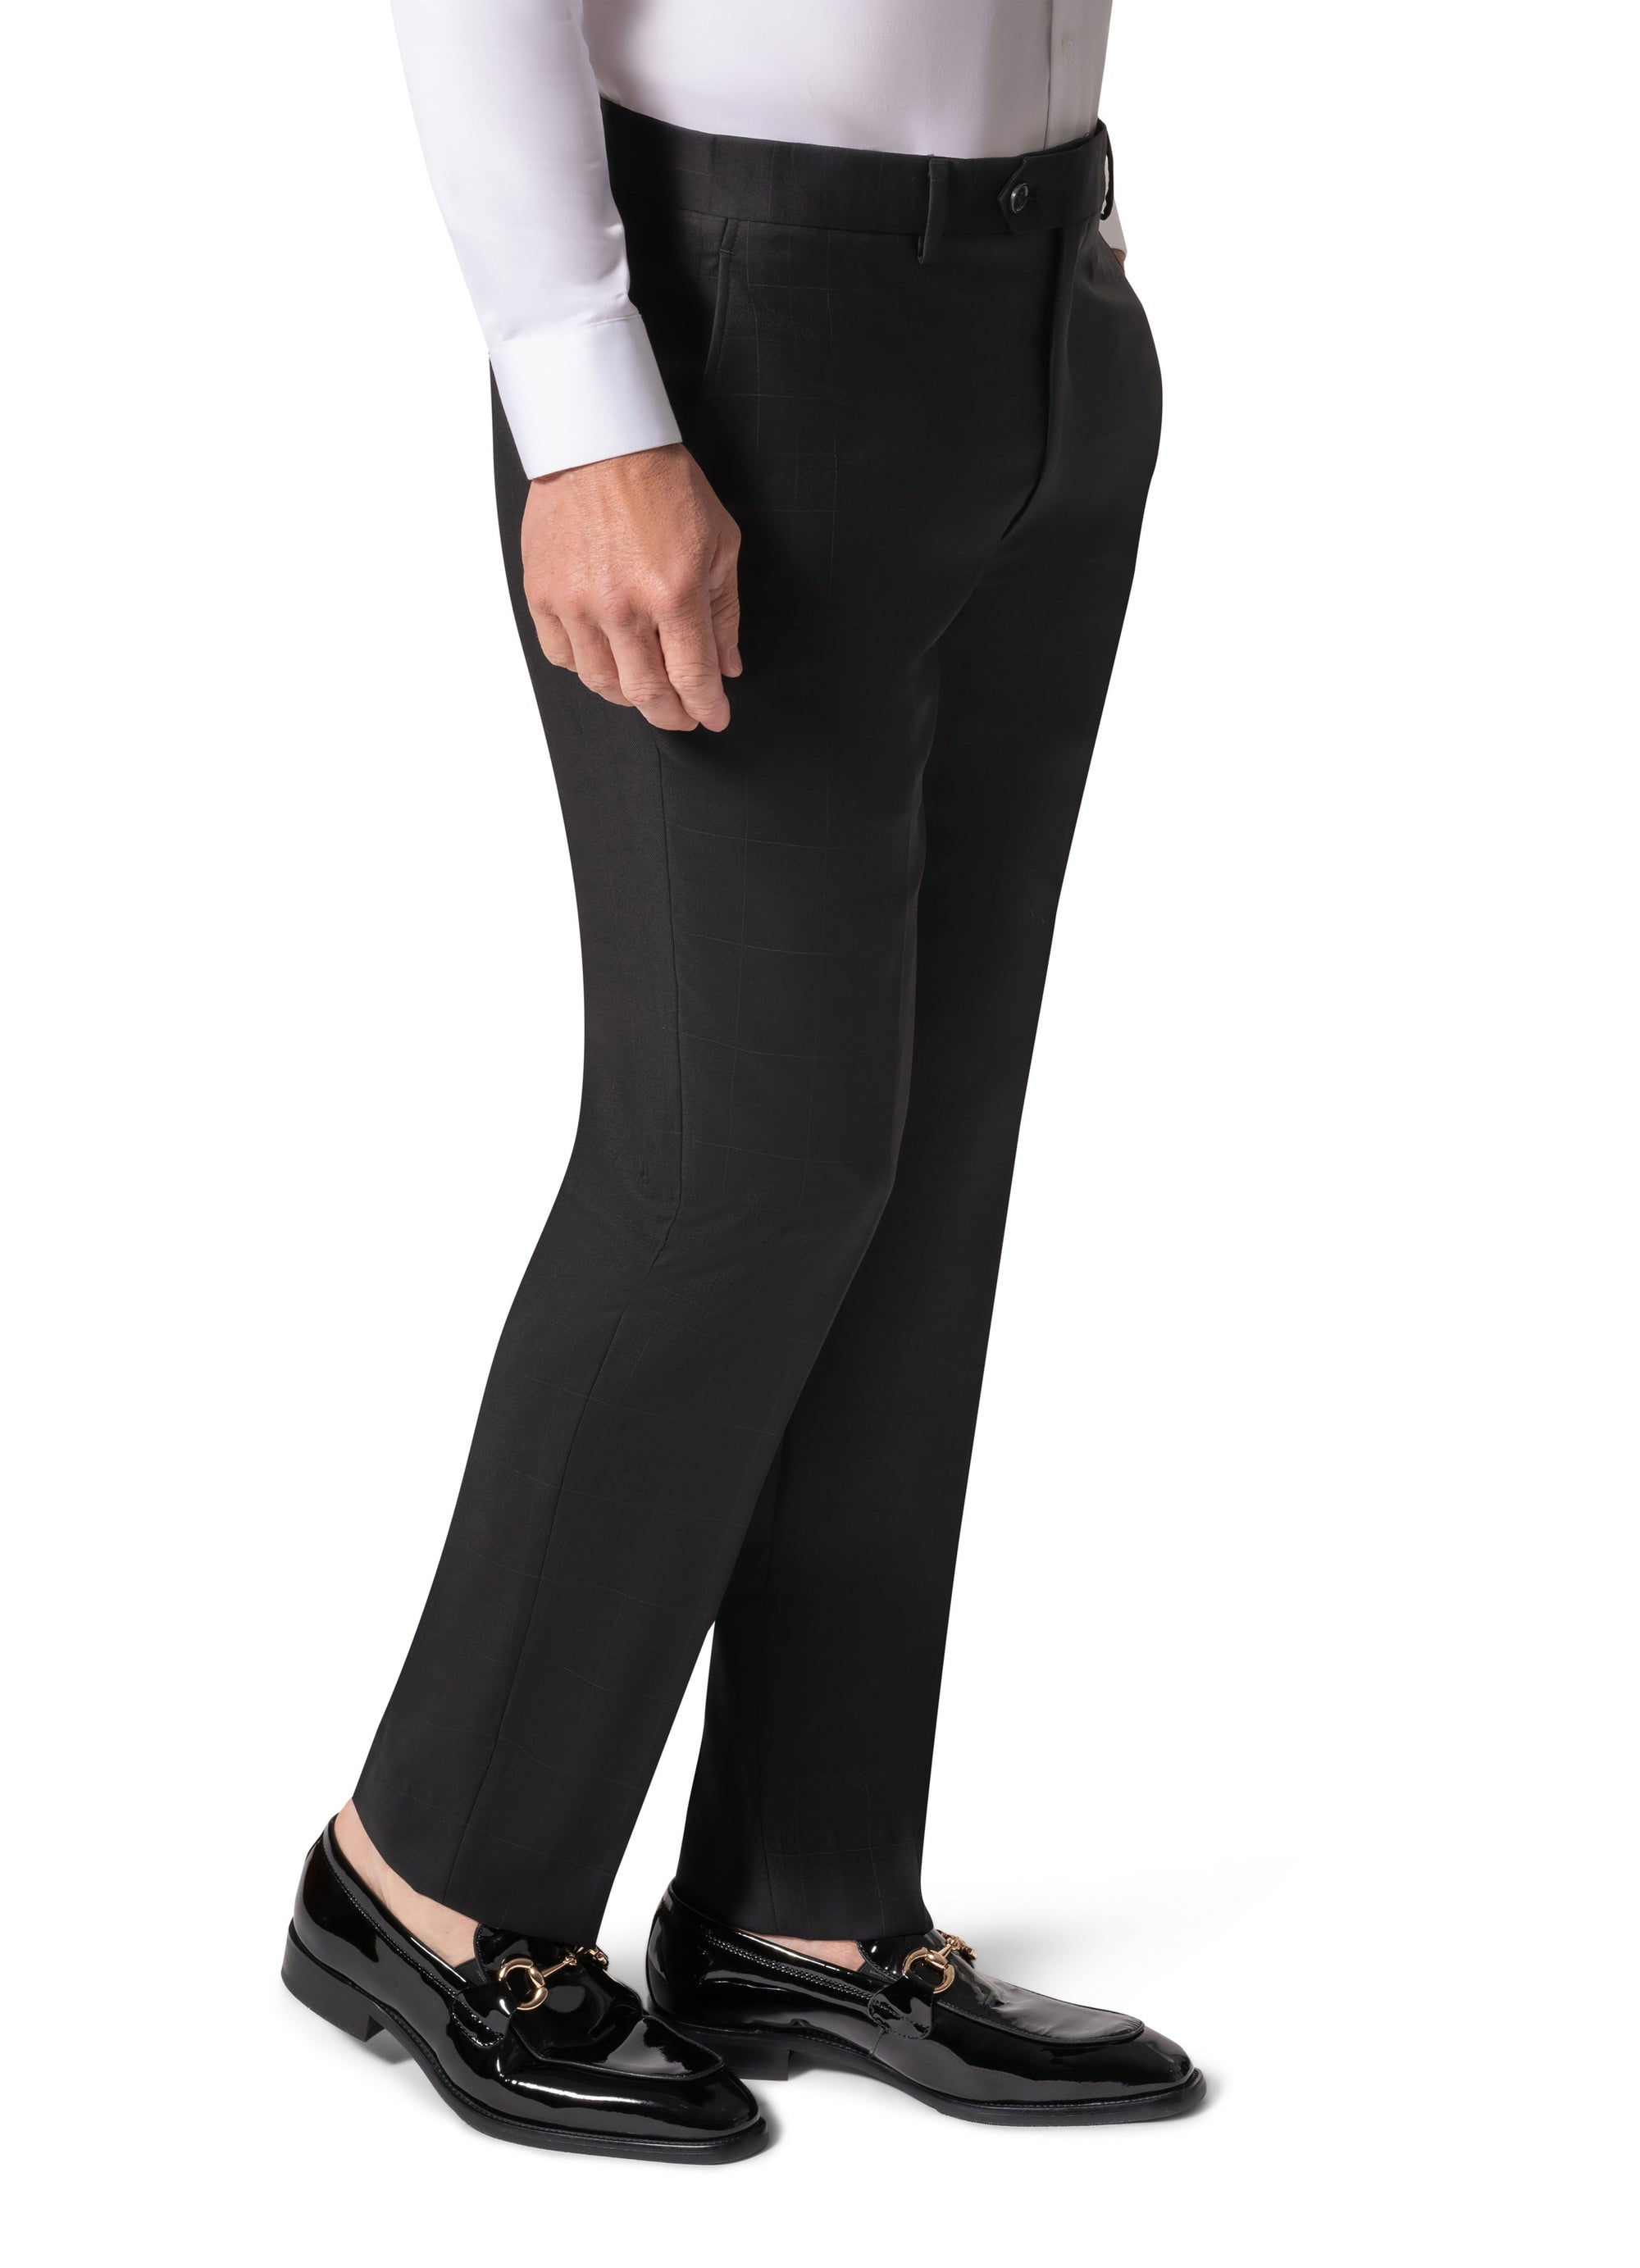 Berragamo Elegant - Faille Wool Solid Suit 10015.200 Modern Fit - Black